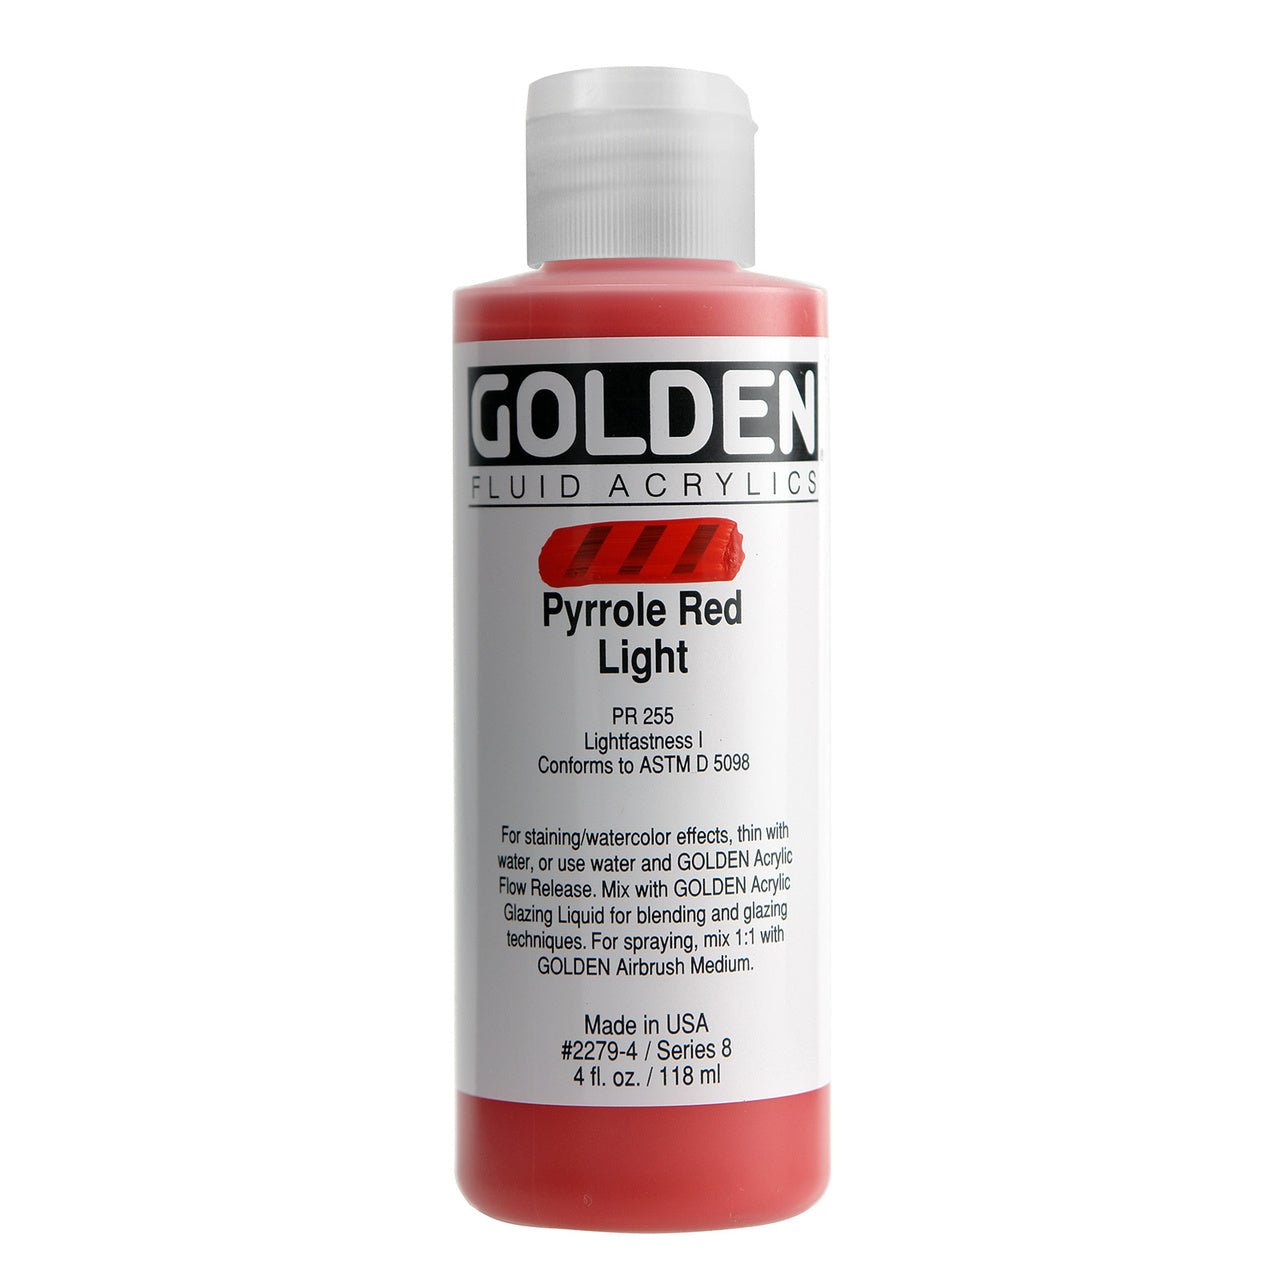 Golden Fluid Acrylic Pyrrole Red Light 4 oz - merriartist.com